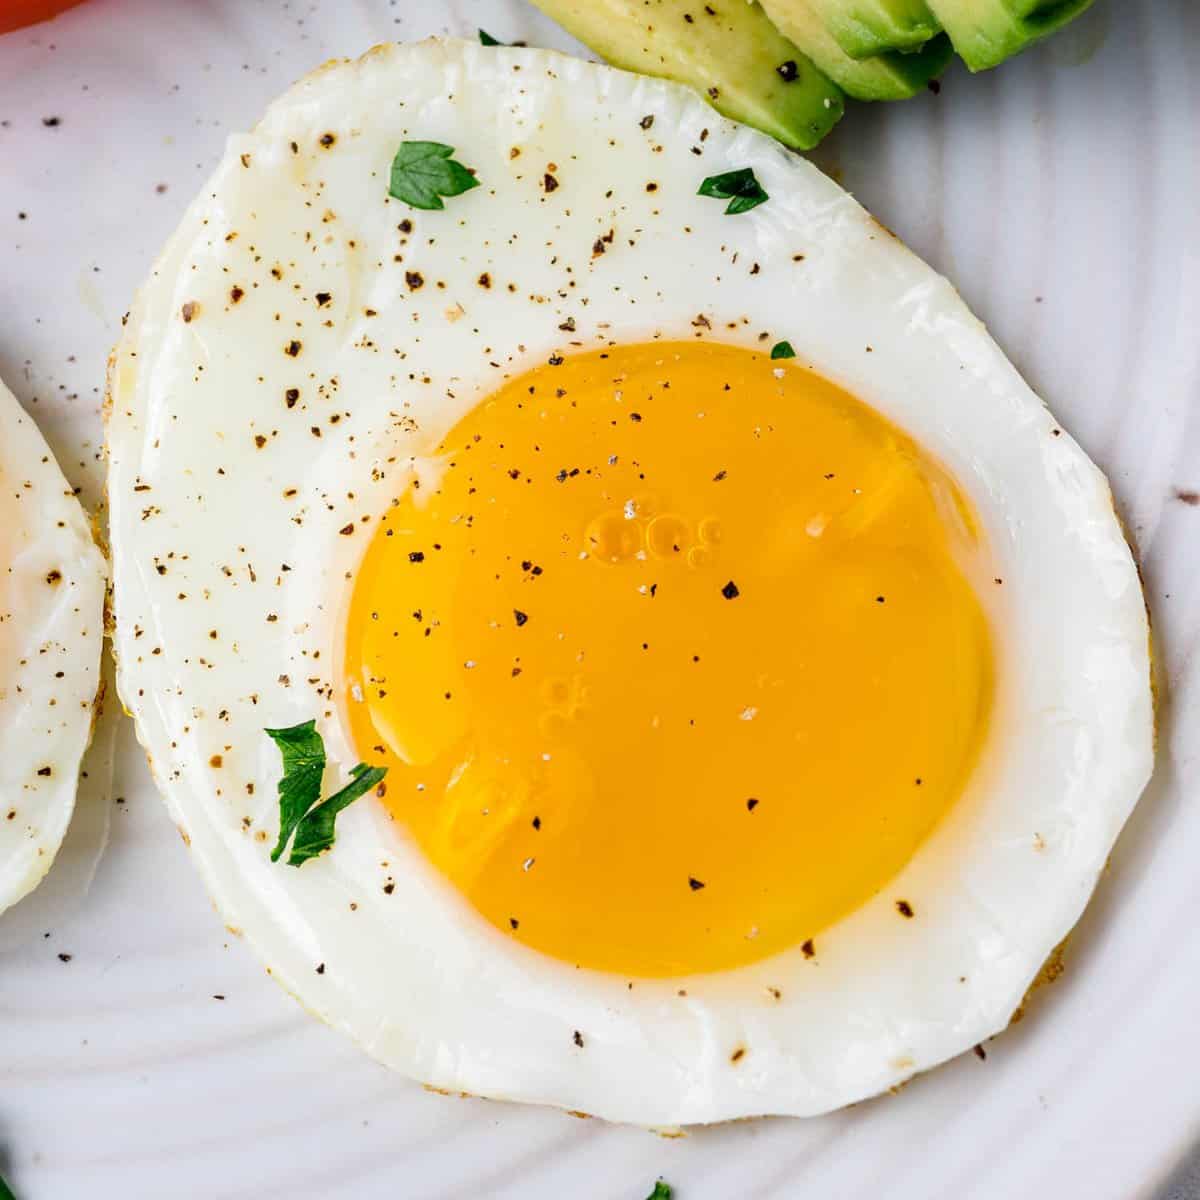 https://pancakerecipes.com/wp-content/uploads/2022/07/Sunny-Side-Up-Eggs-Web-Size-7148-square.jpg